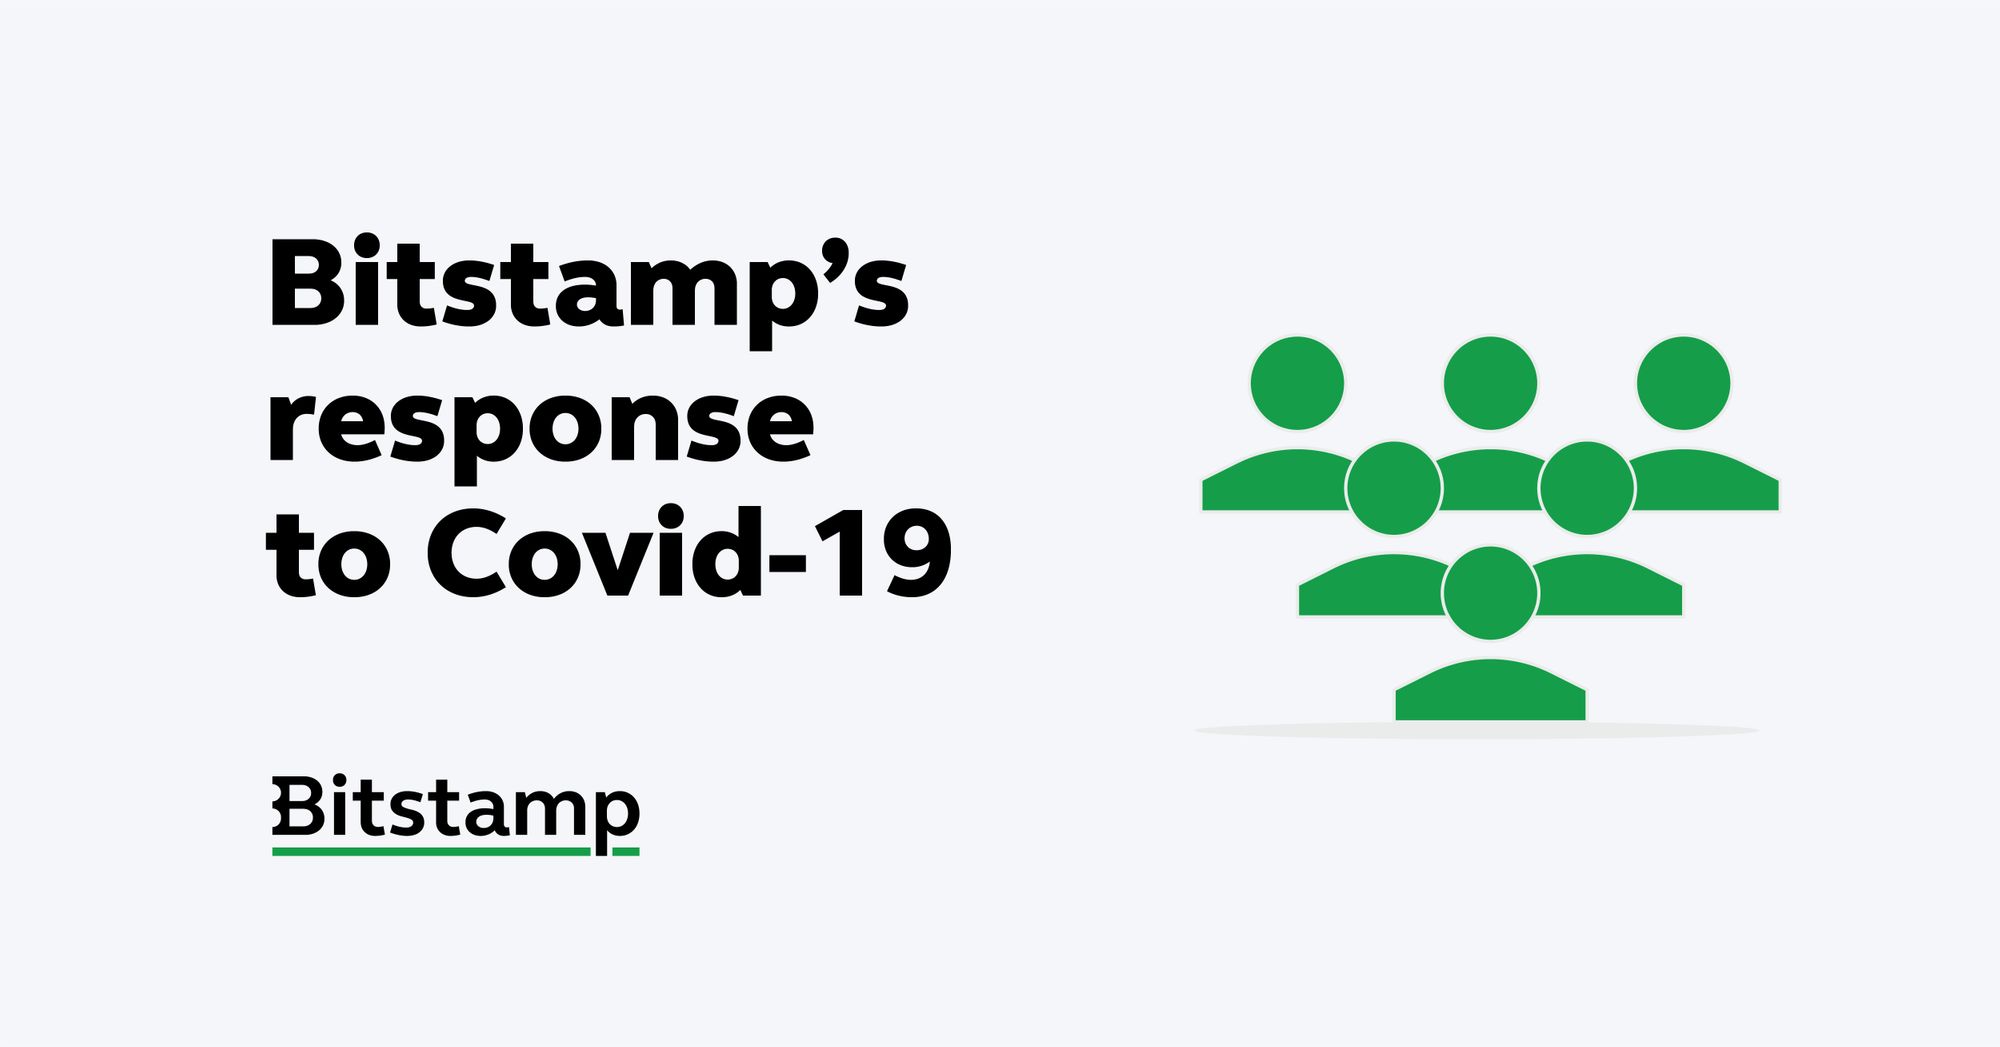 Bitstamp’s response to COVID-19